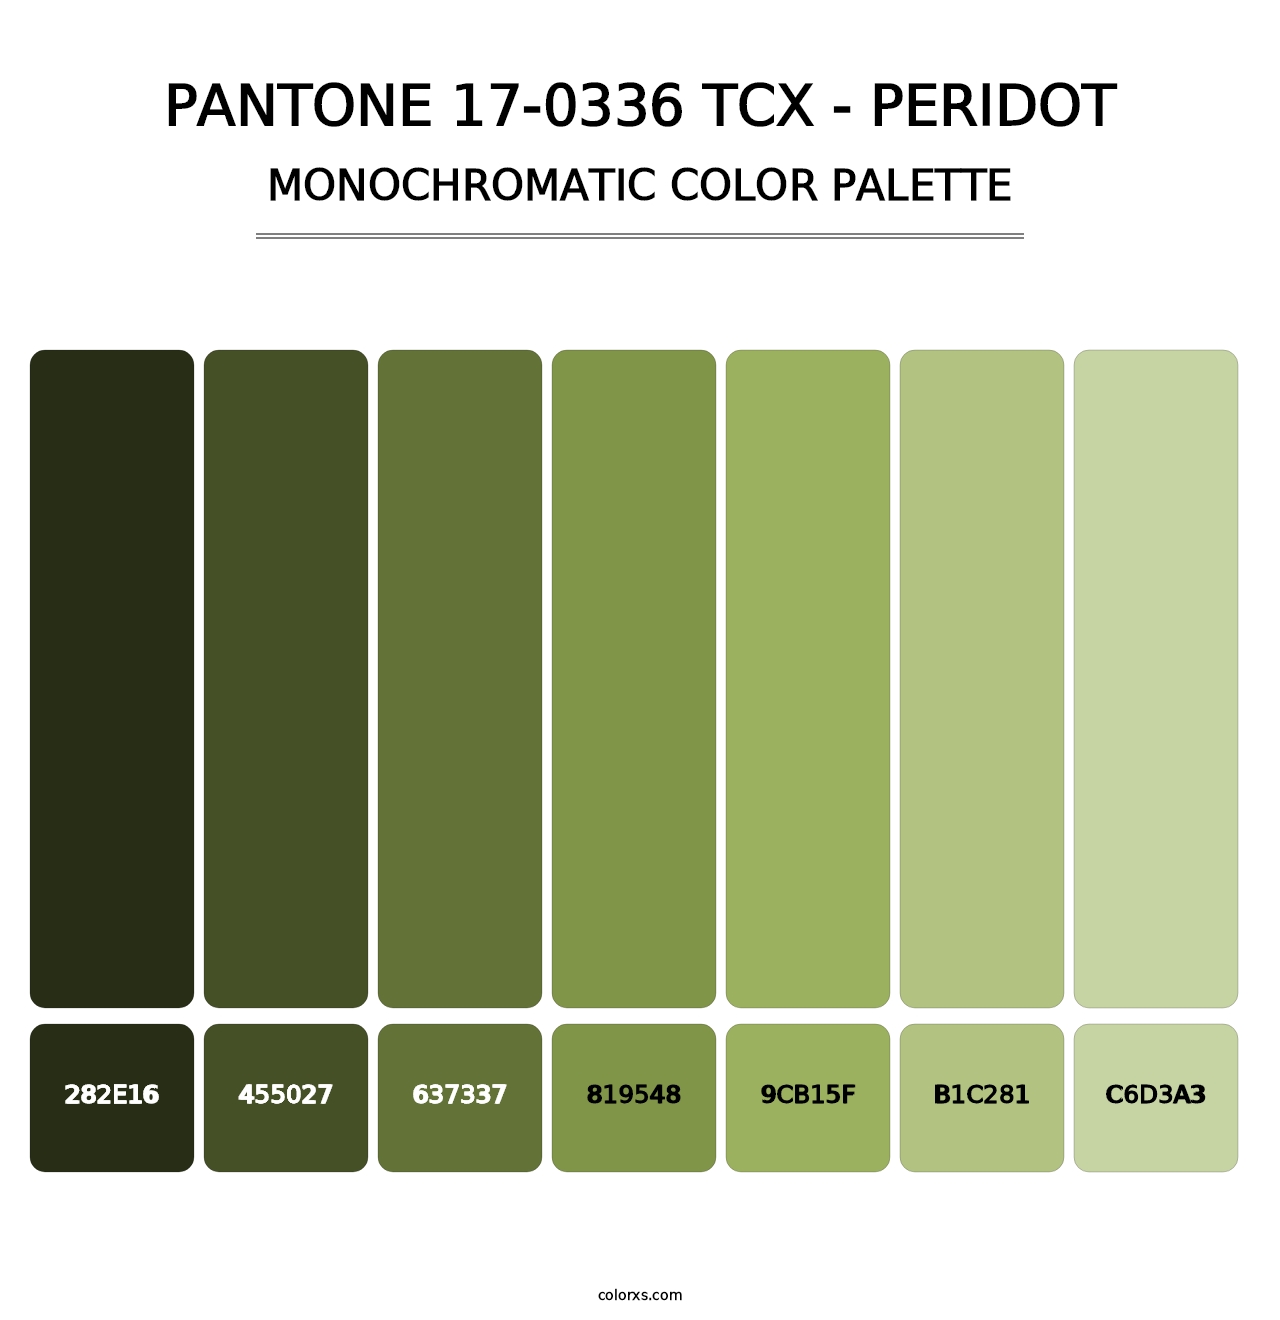 PANTONE 17-0336 TCX - Peridot - Monochromatic Color Palette